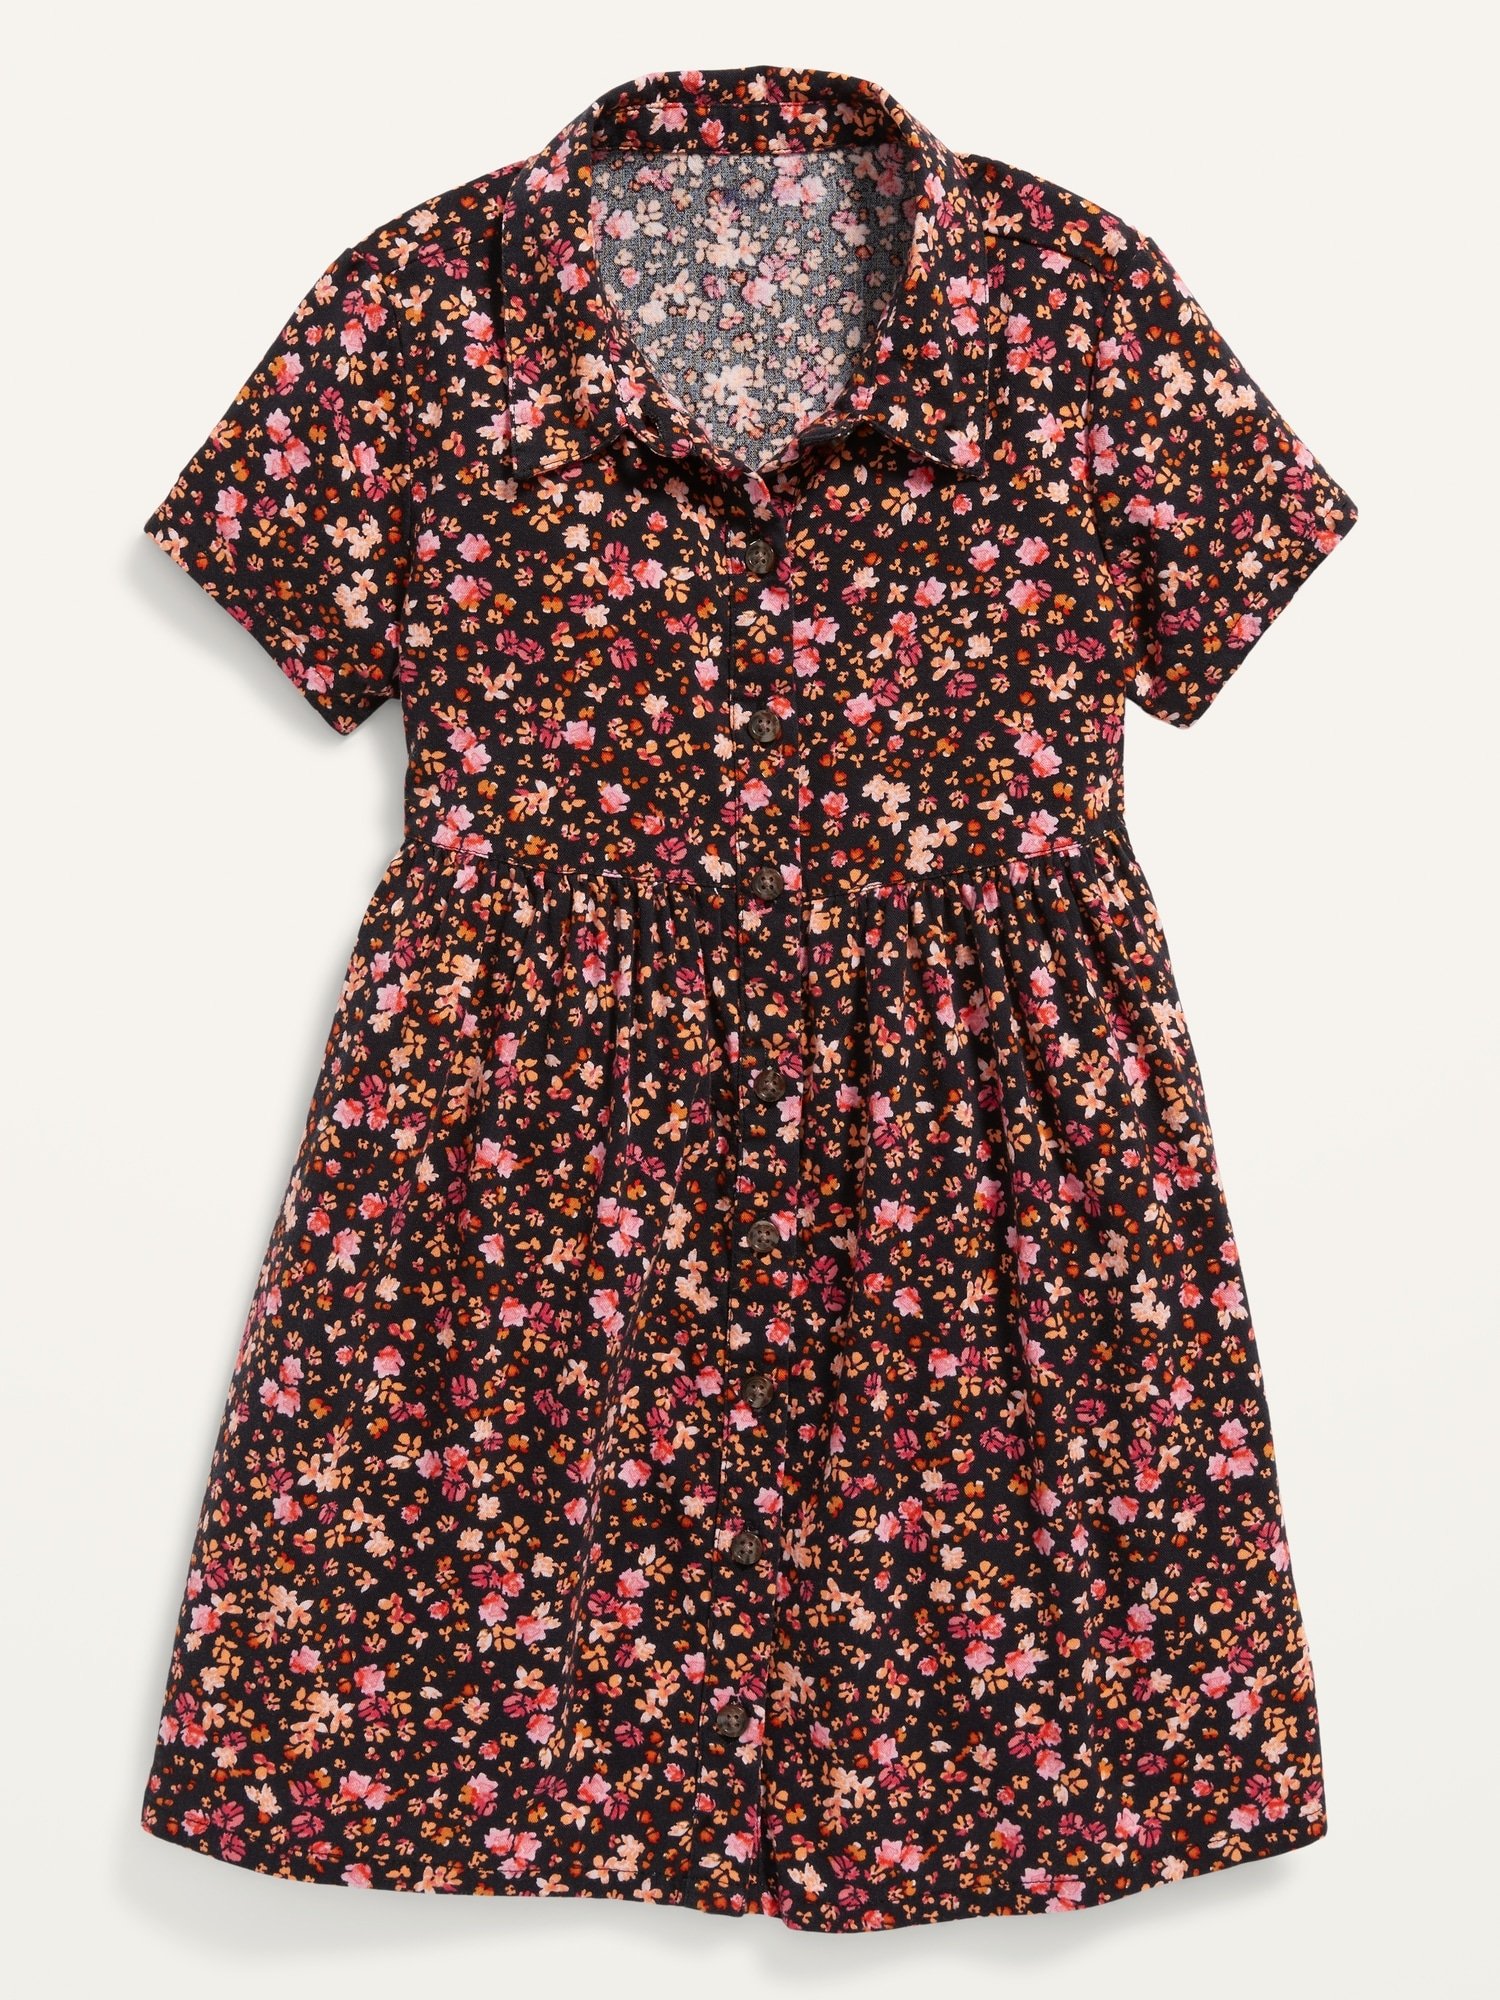 ONLINE EXCLUSIVE_Floral Button-Front Shirt Dress for Toddler Girls_BlackDitsyFloral_1550.jpeg